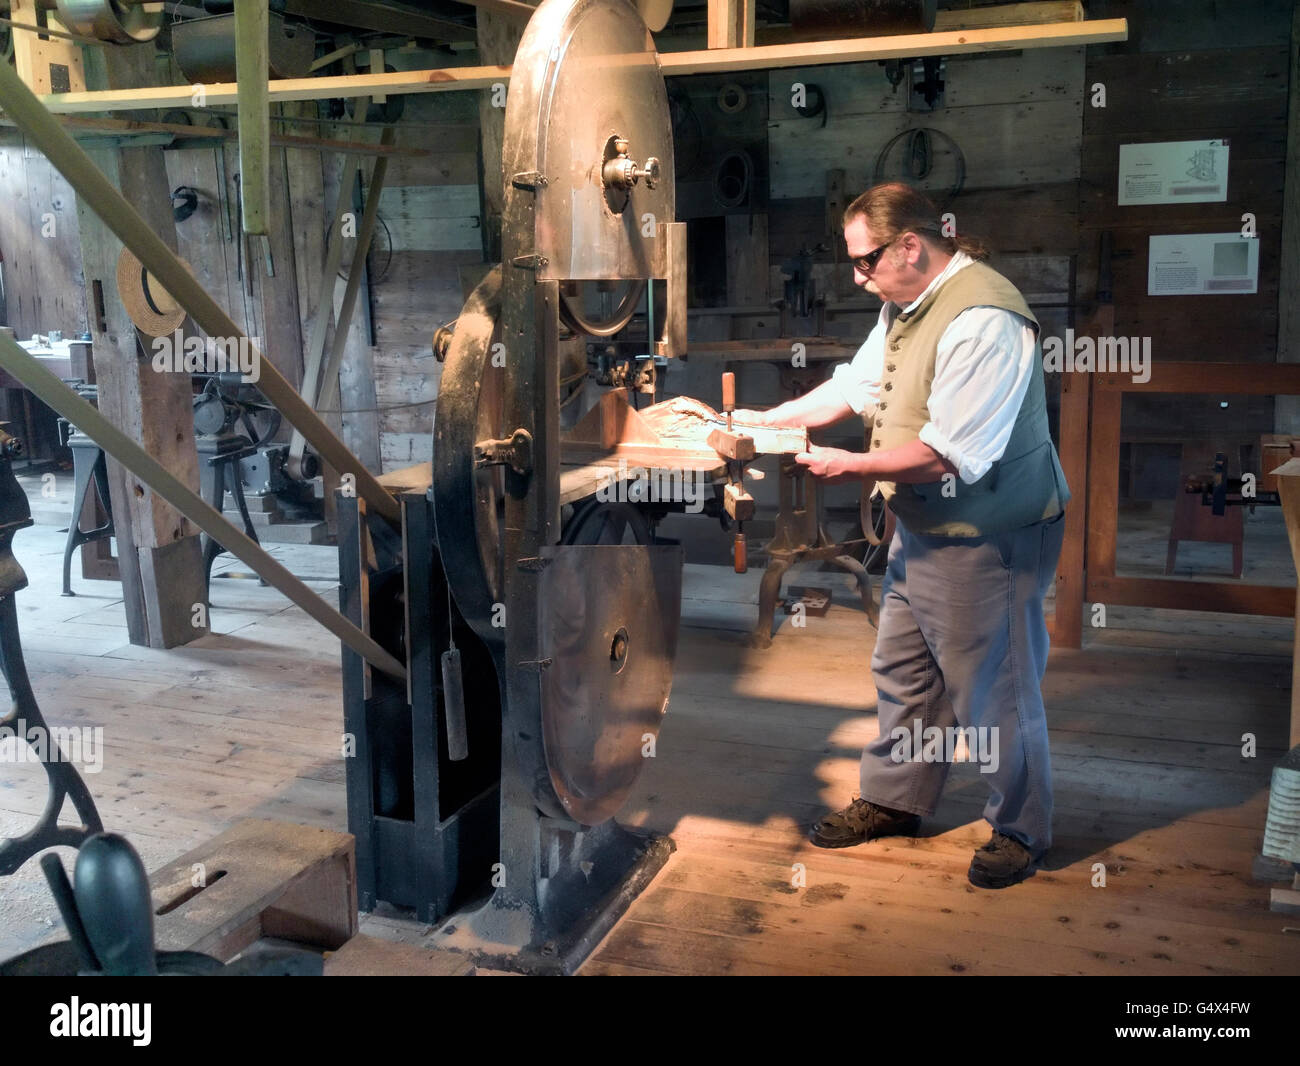 A man turning a lathre at wood working Display, Hancock Shaker Village, Massachusetts Stock Photo